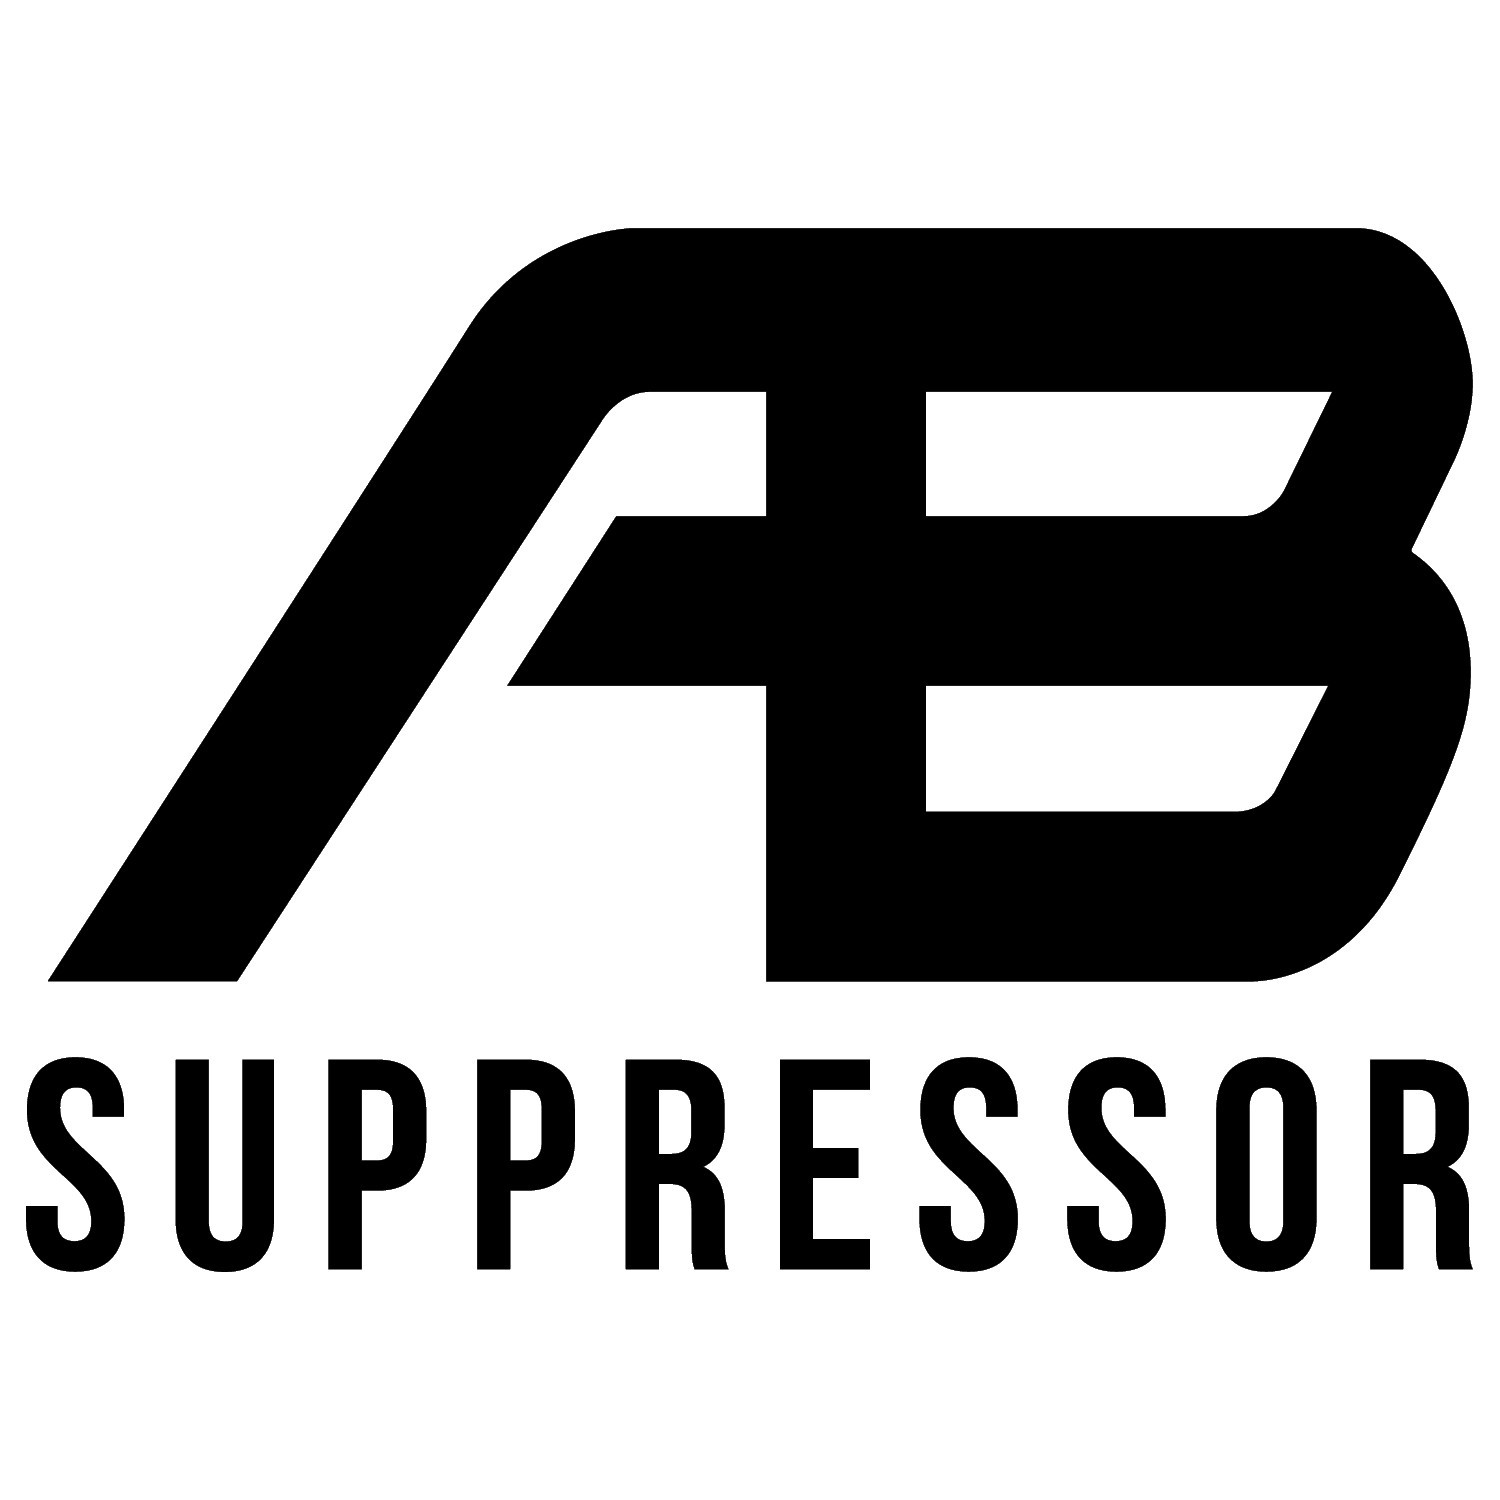 AB Suppressor